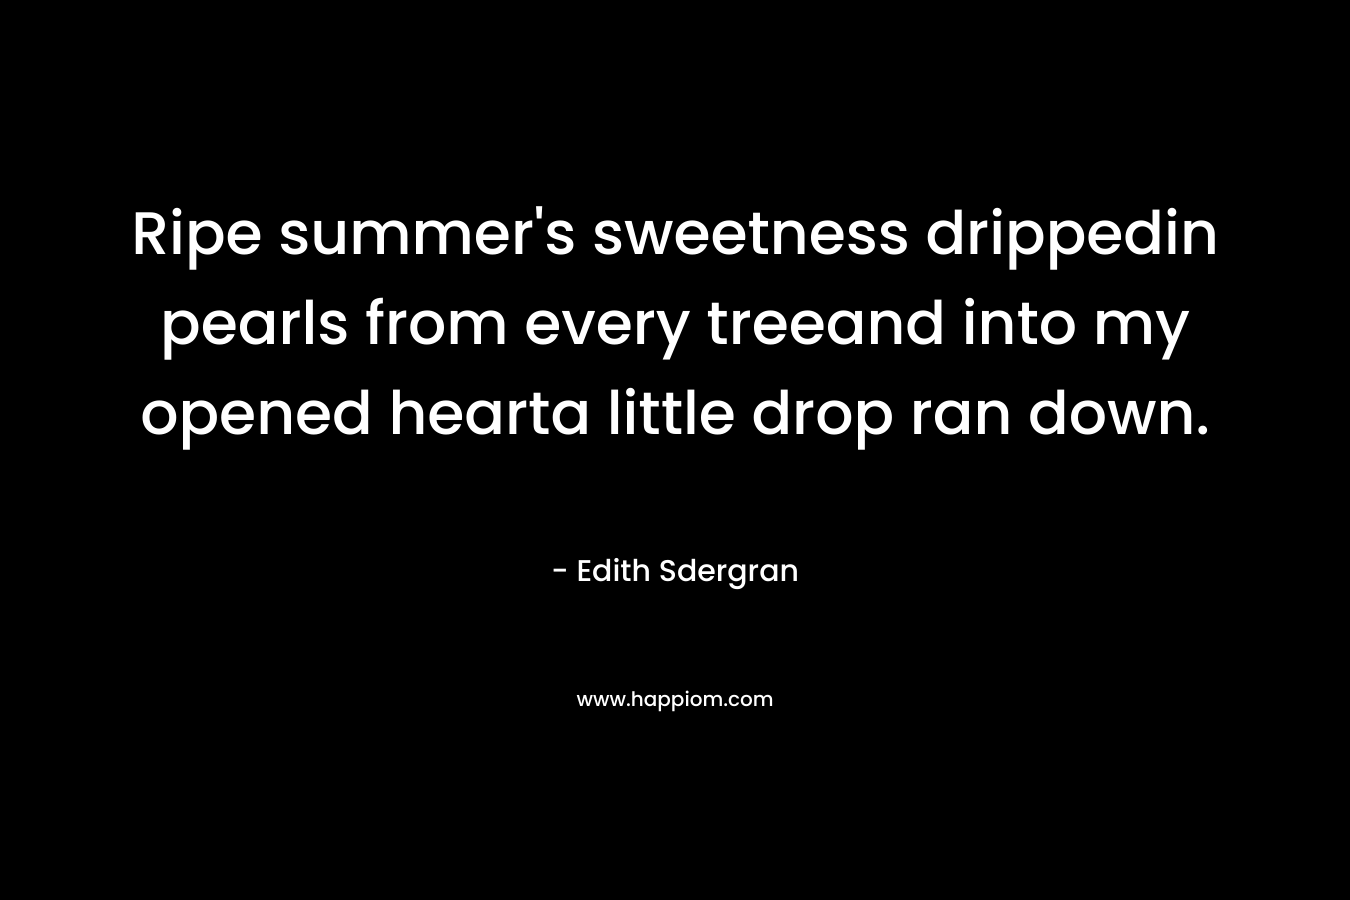 Ripe summer's sweetness drippedin pearls from every treeand into my opened hearta little drop ran down.